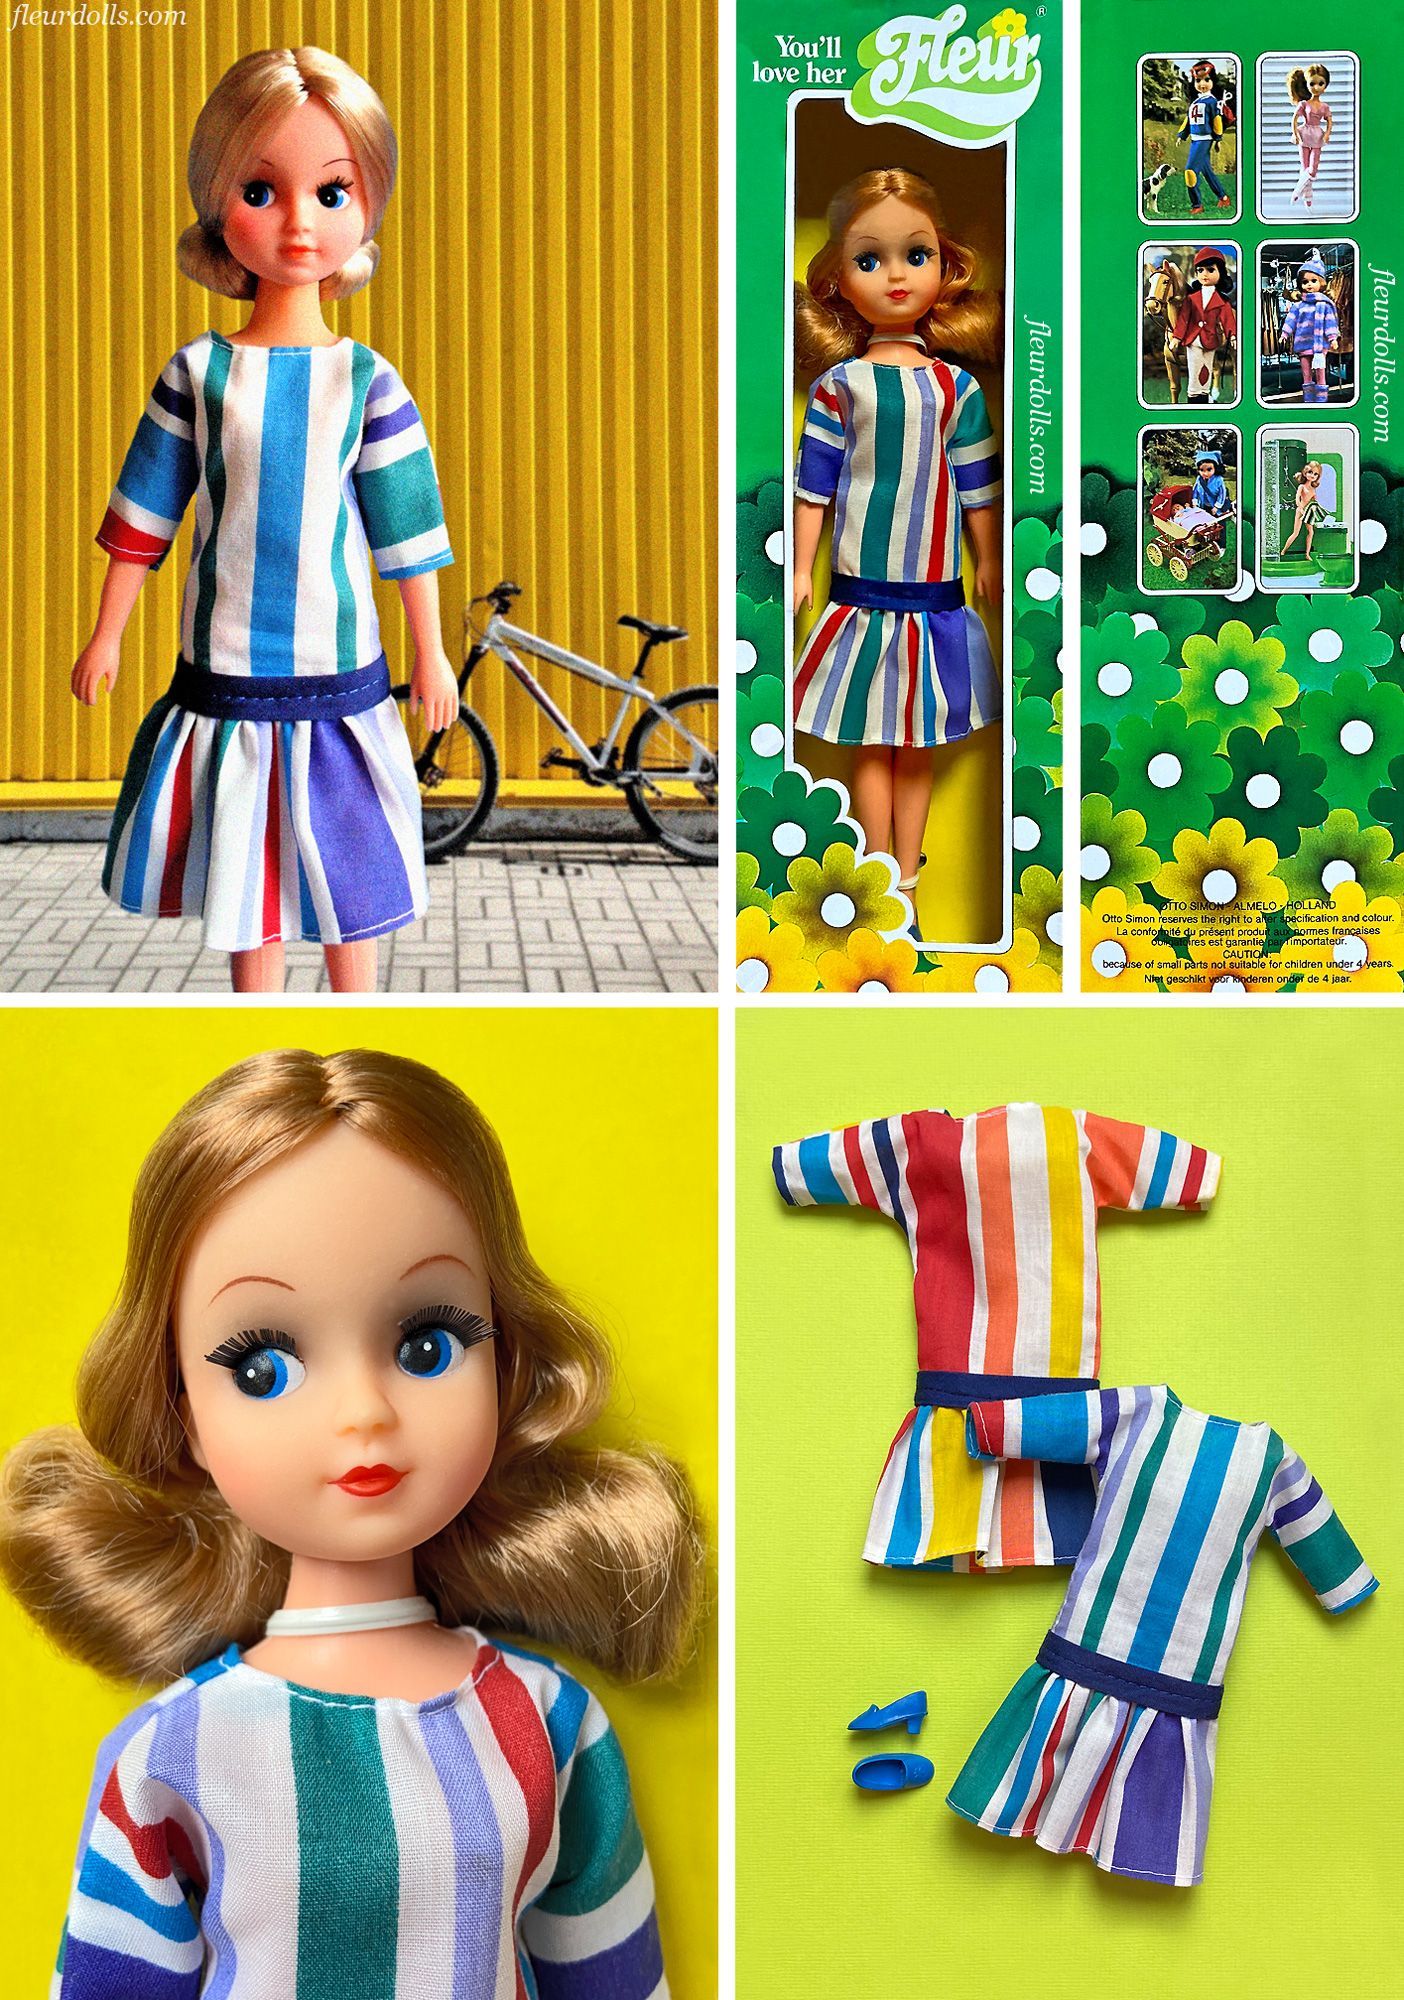 Fleur doll in striped dress Otto Simon Netherlands 1980s